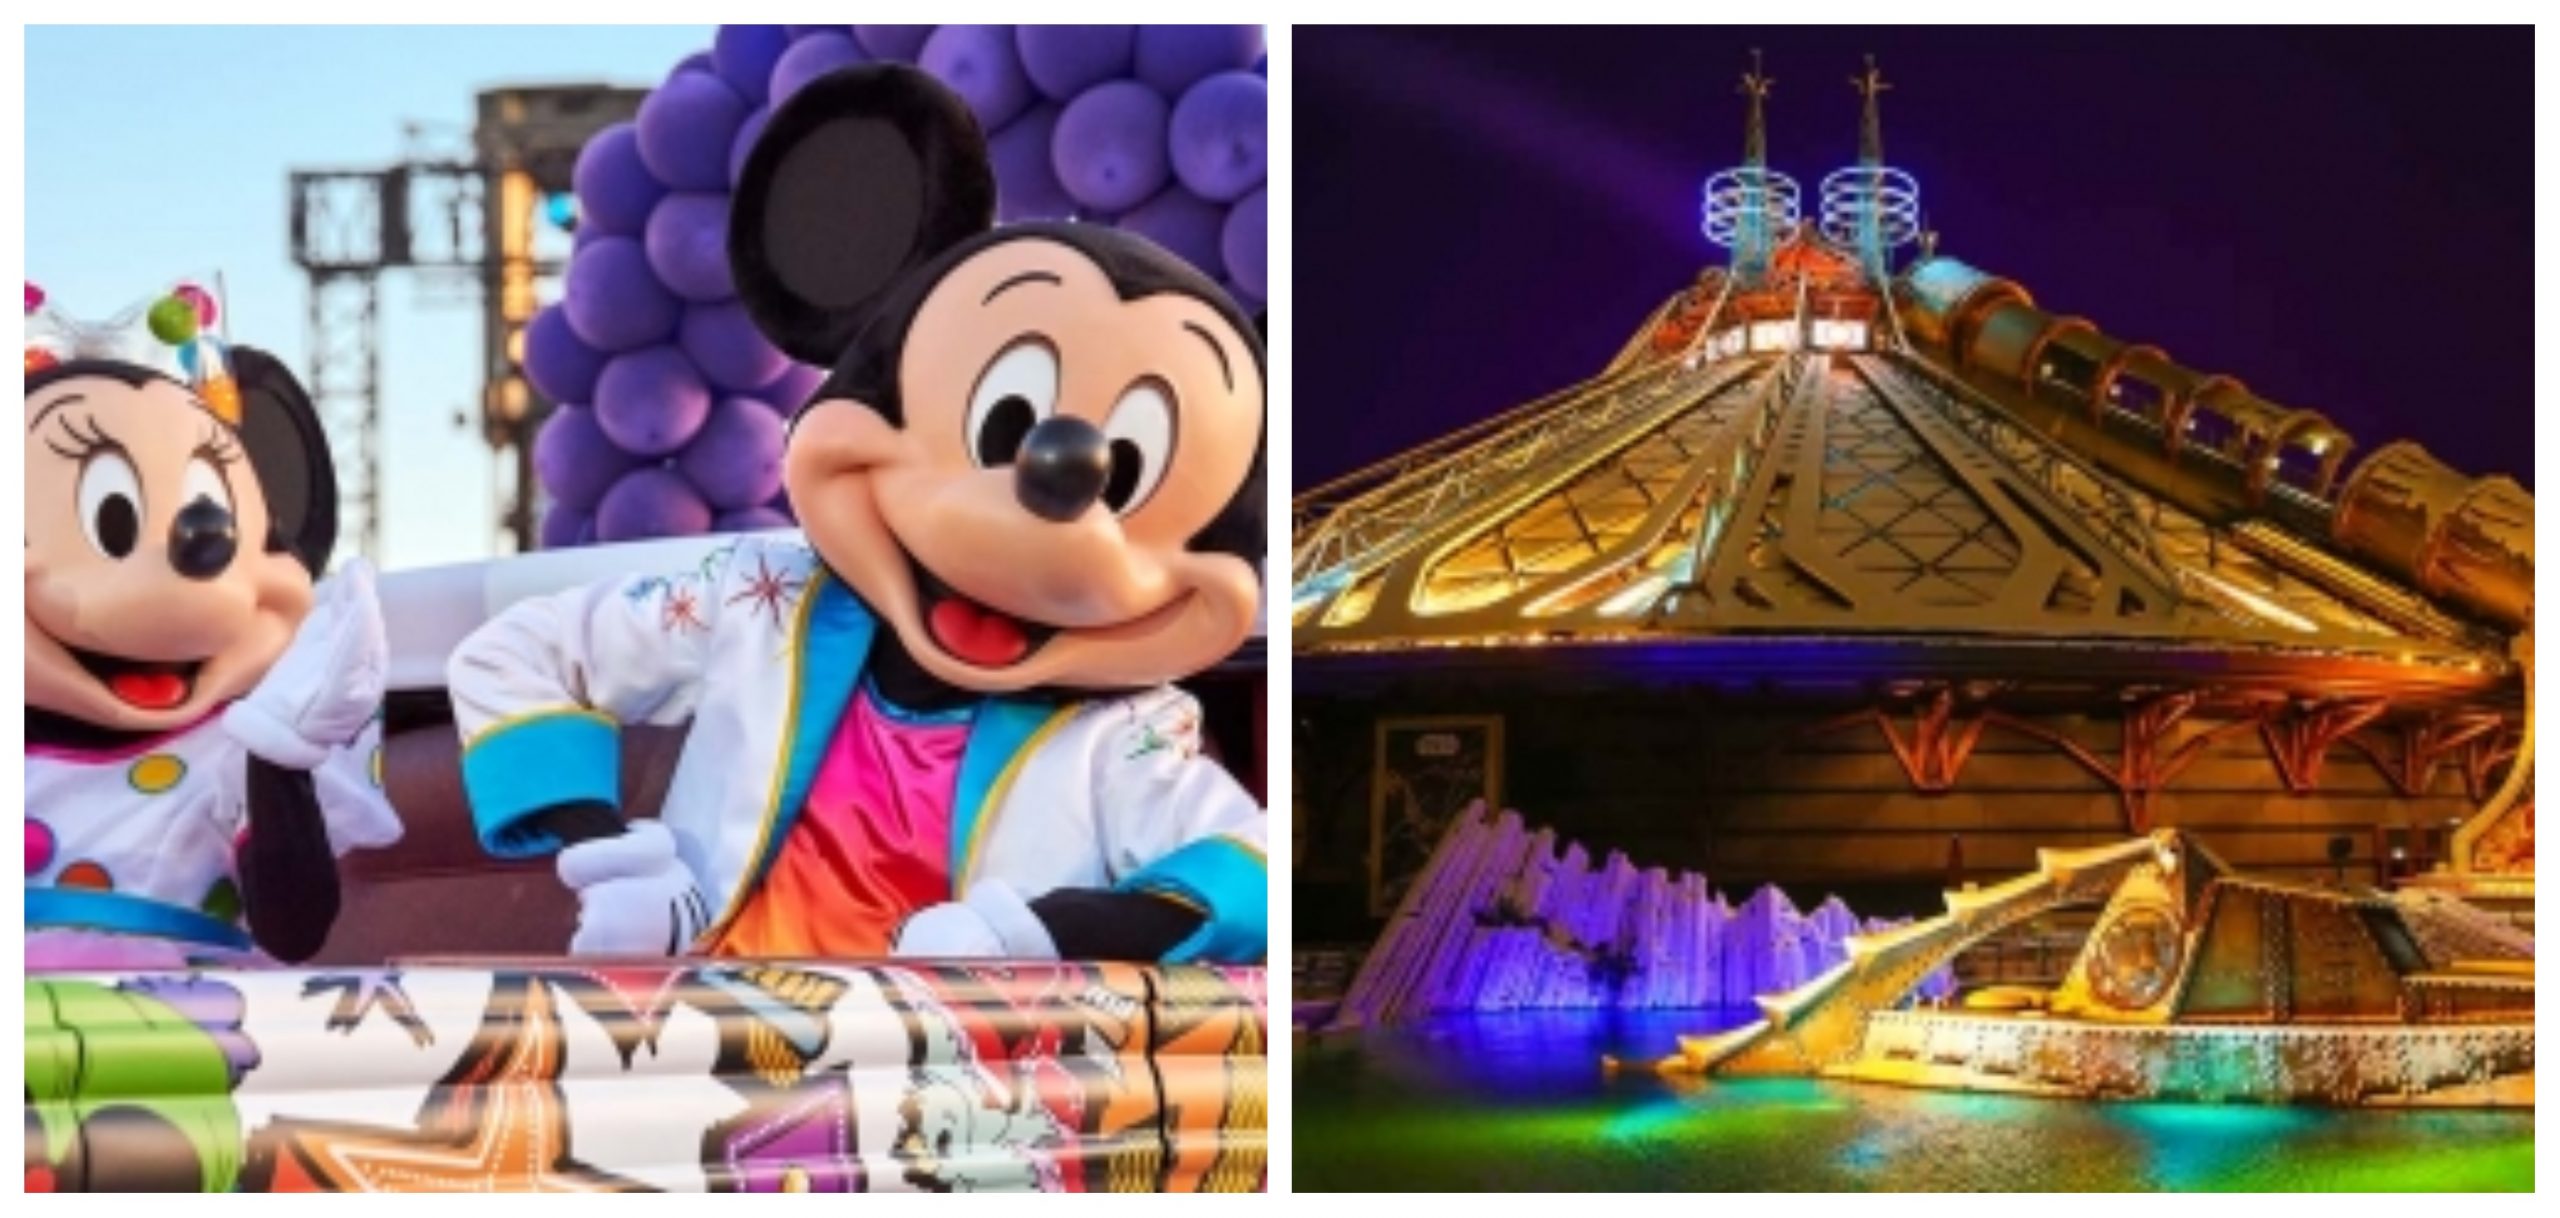 Disneyland Paris Pride 2020 Tickets On Sale!